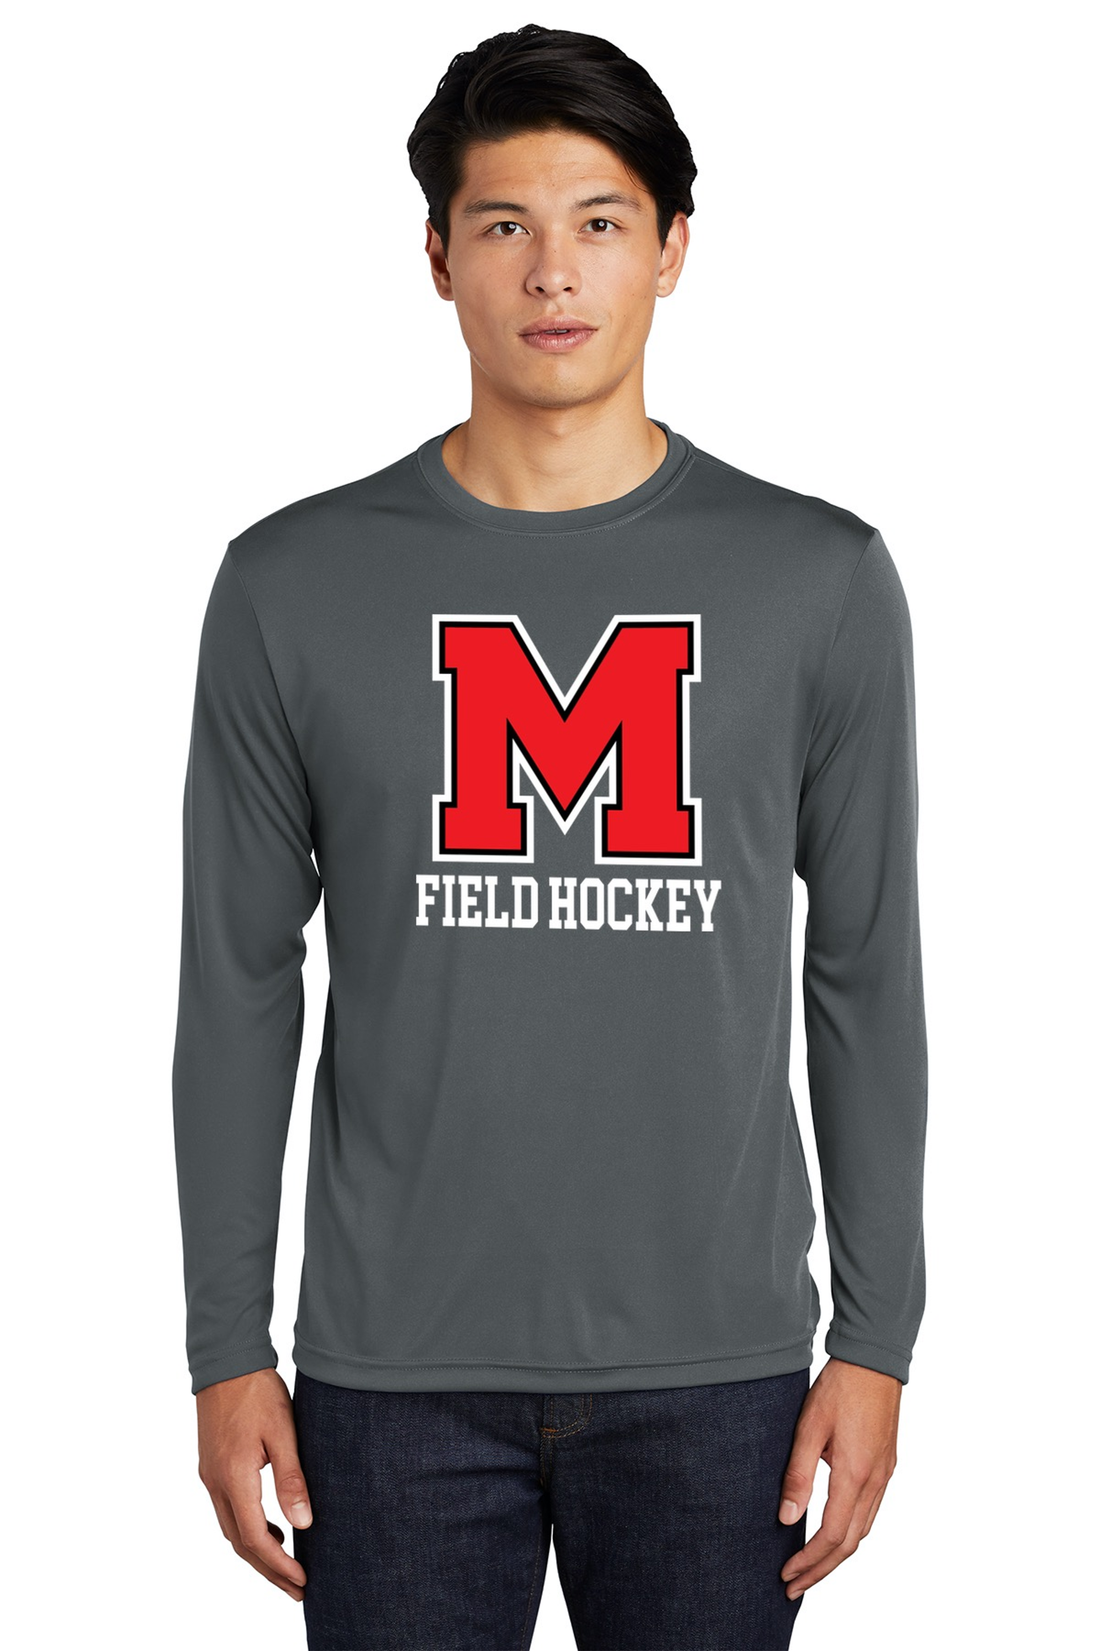 MHS Field Hockey Long Sleeve Performance Shirt